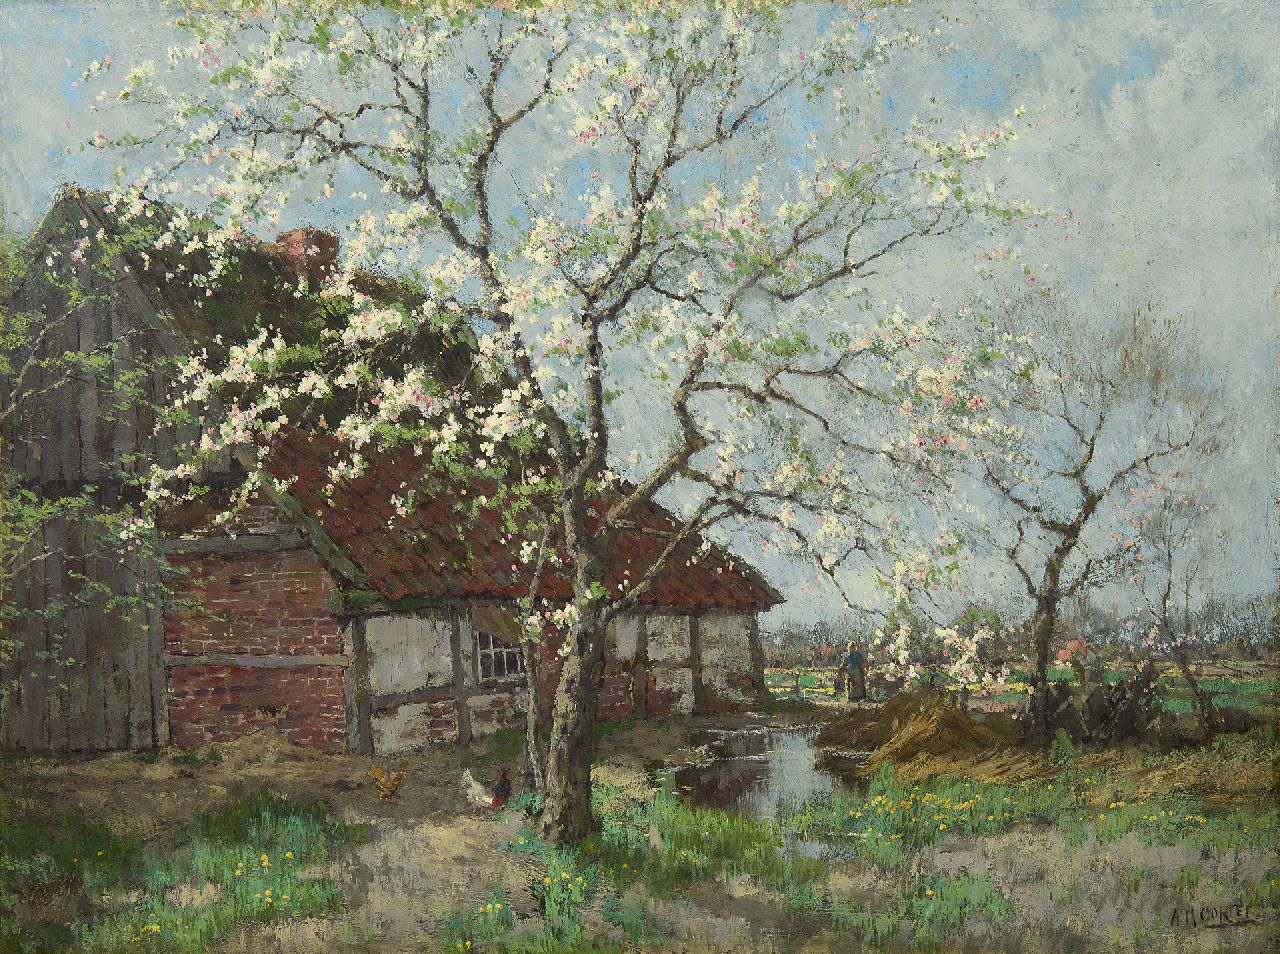 Gorter A.M.  | 'Arnold' Marc Gorter, Spring, oil on canvas 74.9 x 100.2 cm, signed l.r.